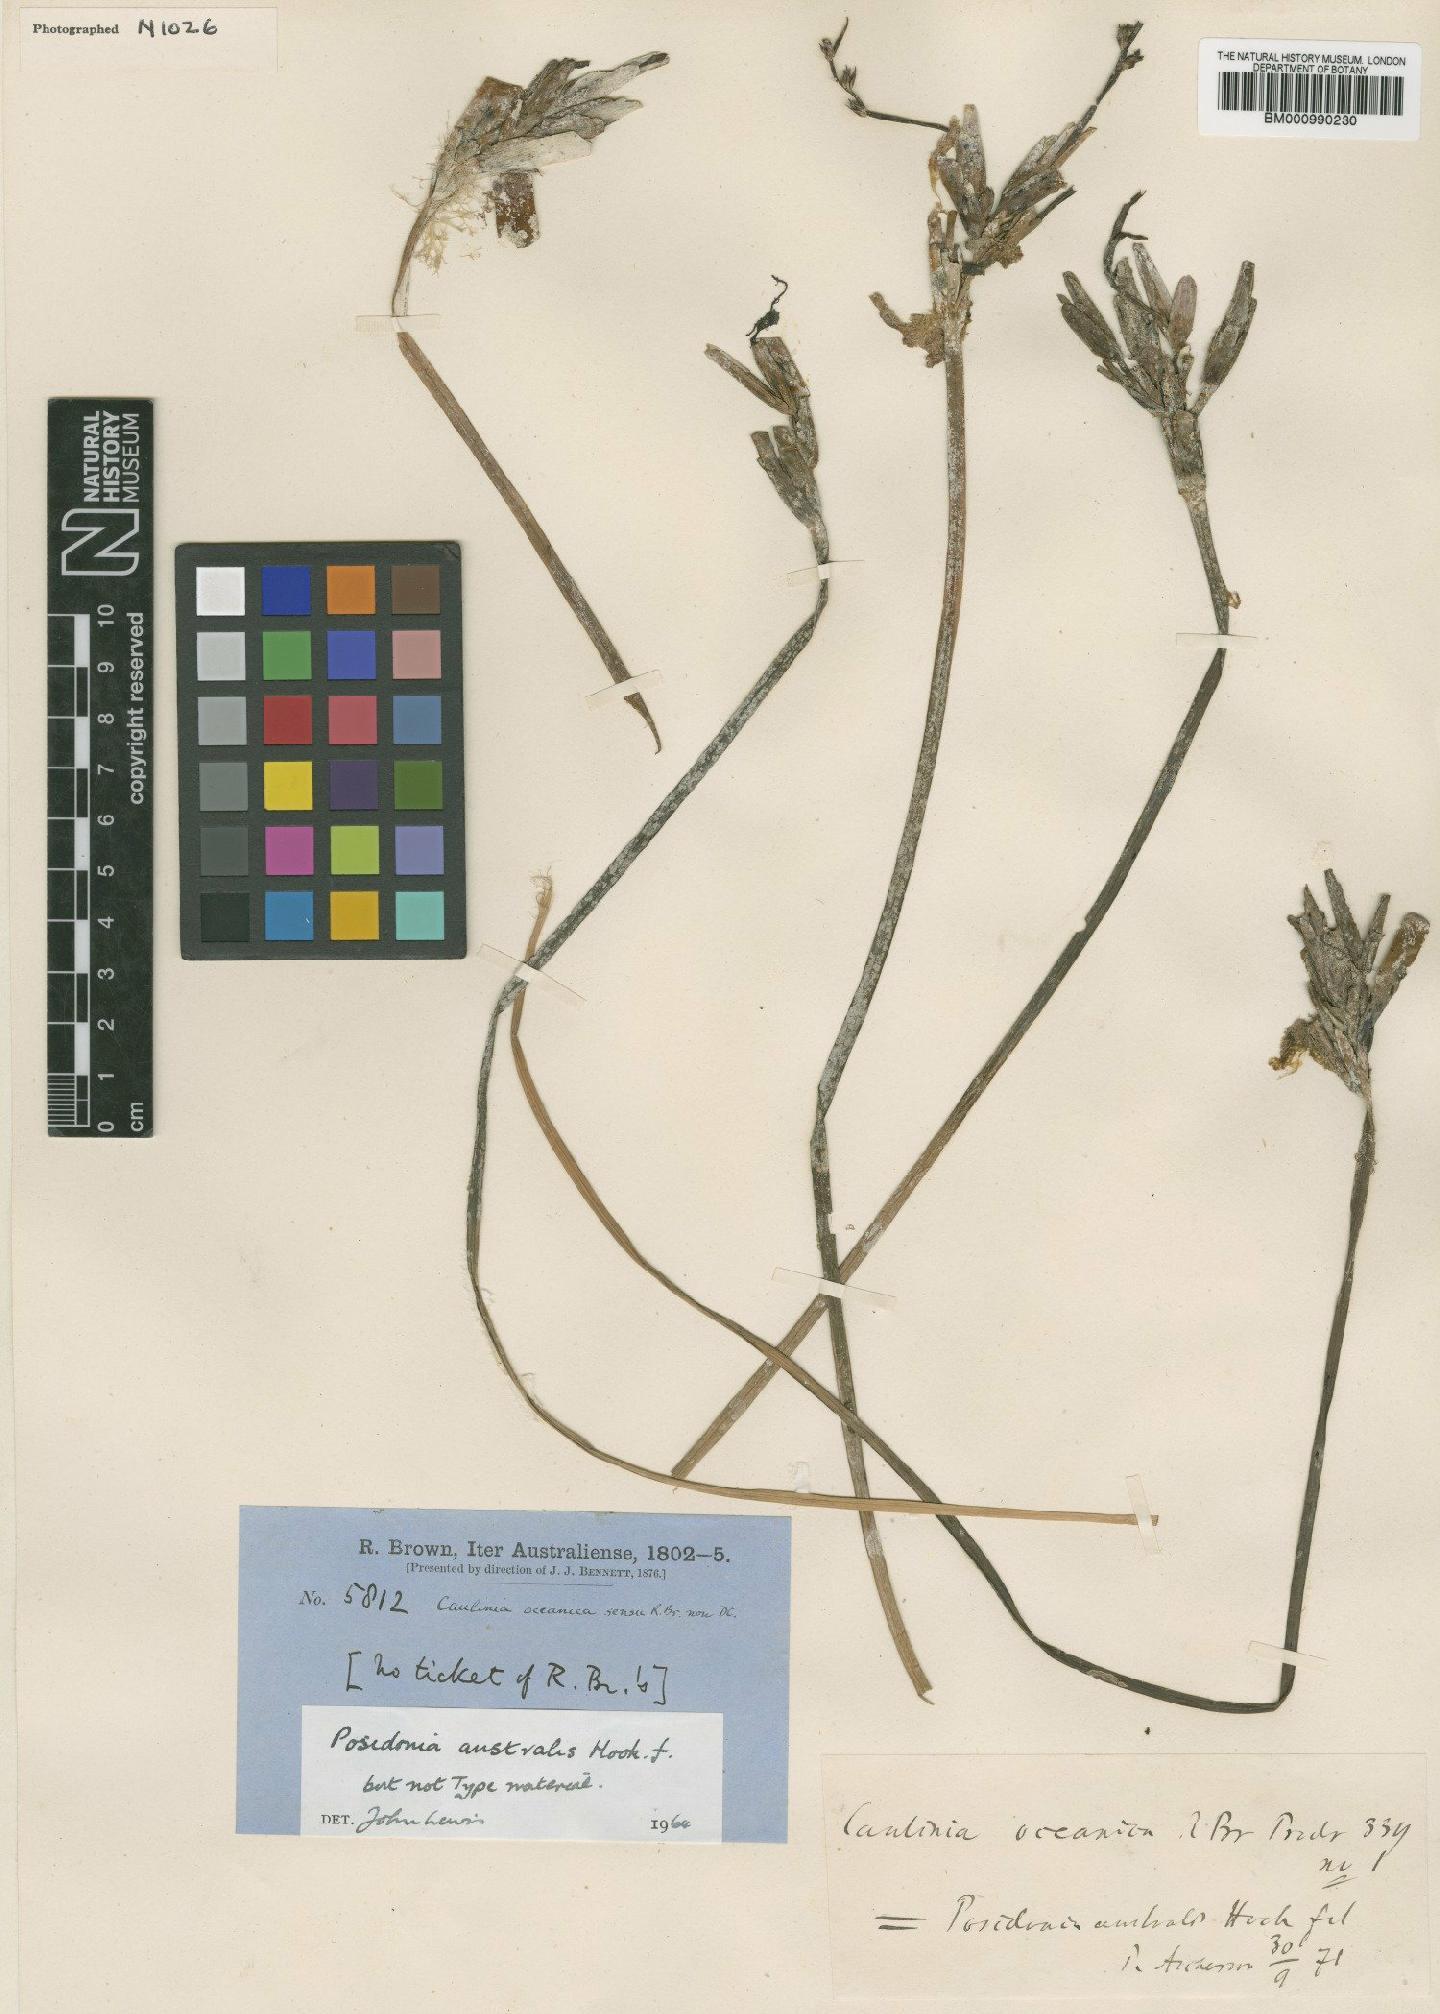 To NHMUK collection (Posidonia australis Hook.f.; Non-Type; NHMUK:ecatalogue:592939)